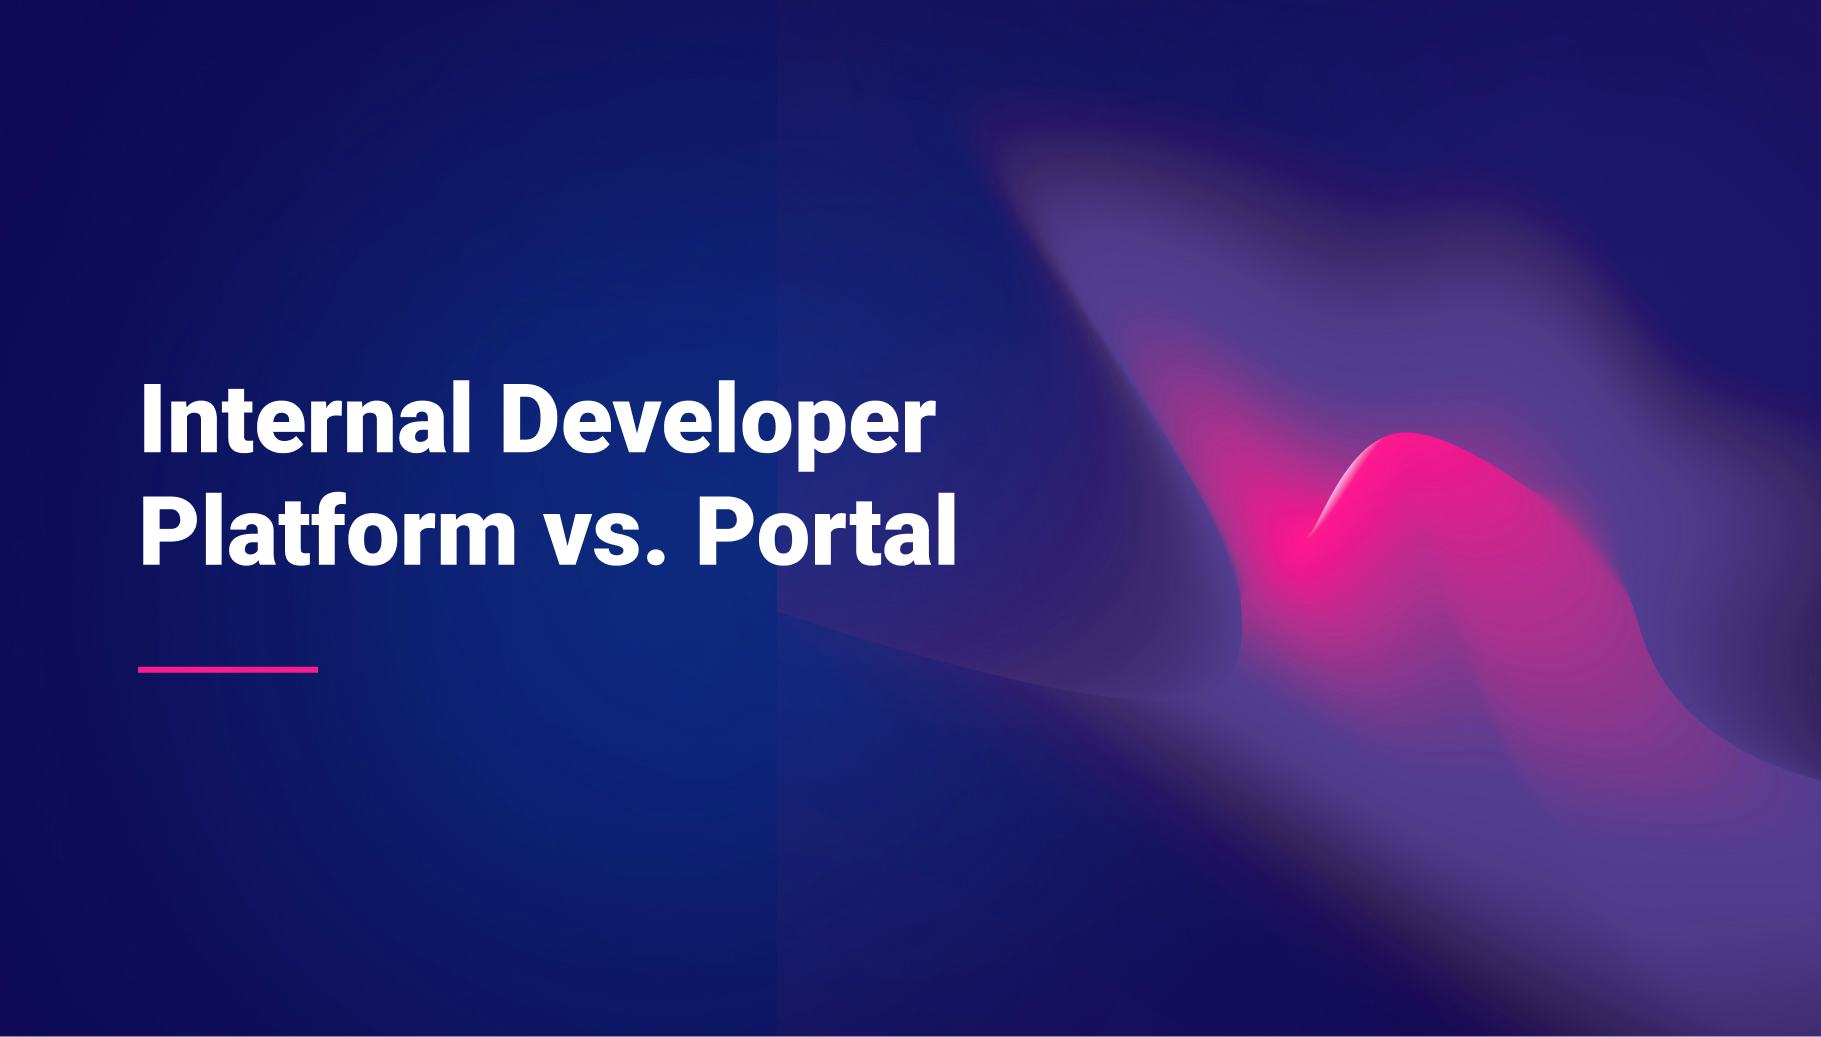 Internal Developer Platform vs. Internal Developer Portal: What's The Difference?